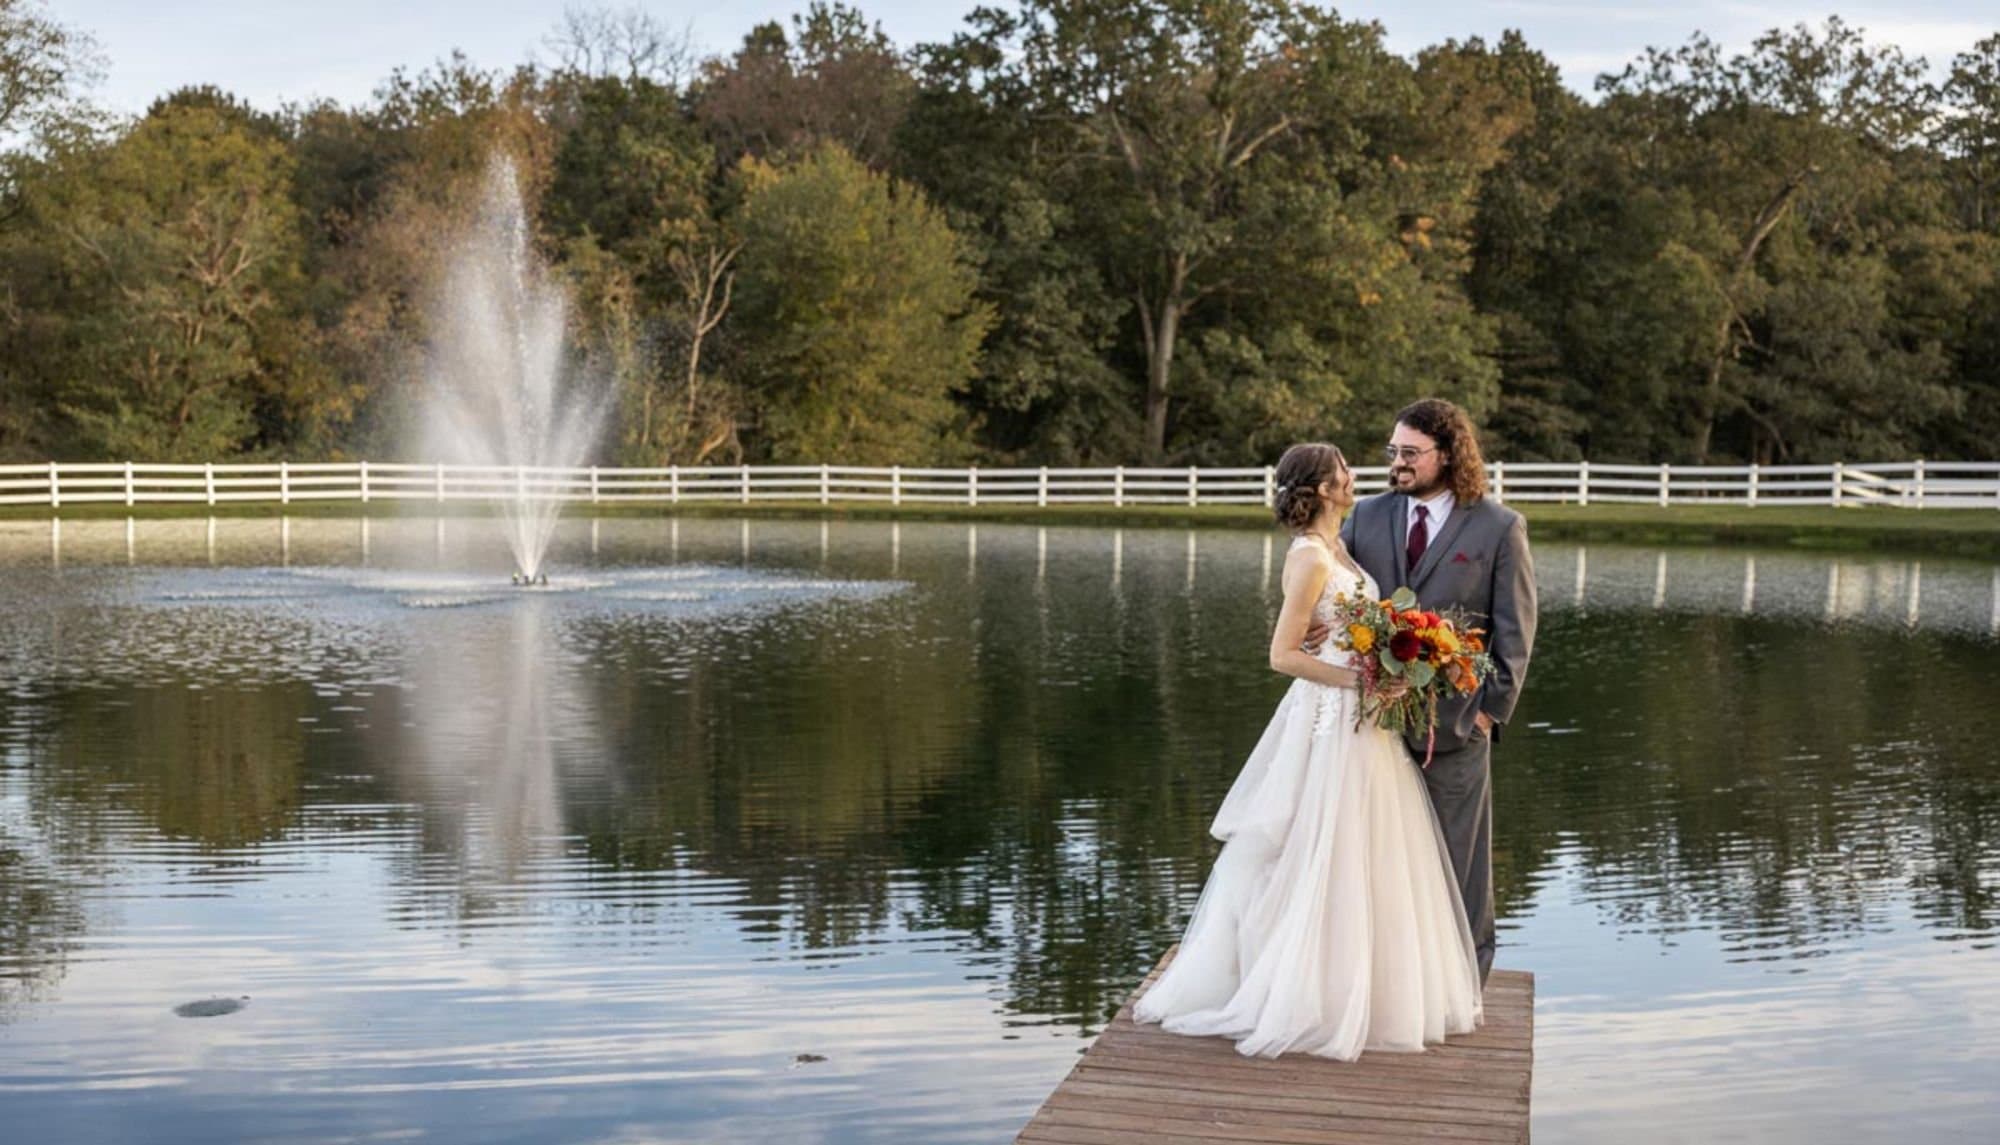 Rachel & Steve Majik - Wedding - Pondview Farm Wedding Venue